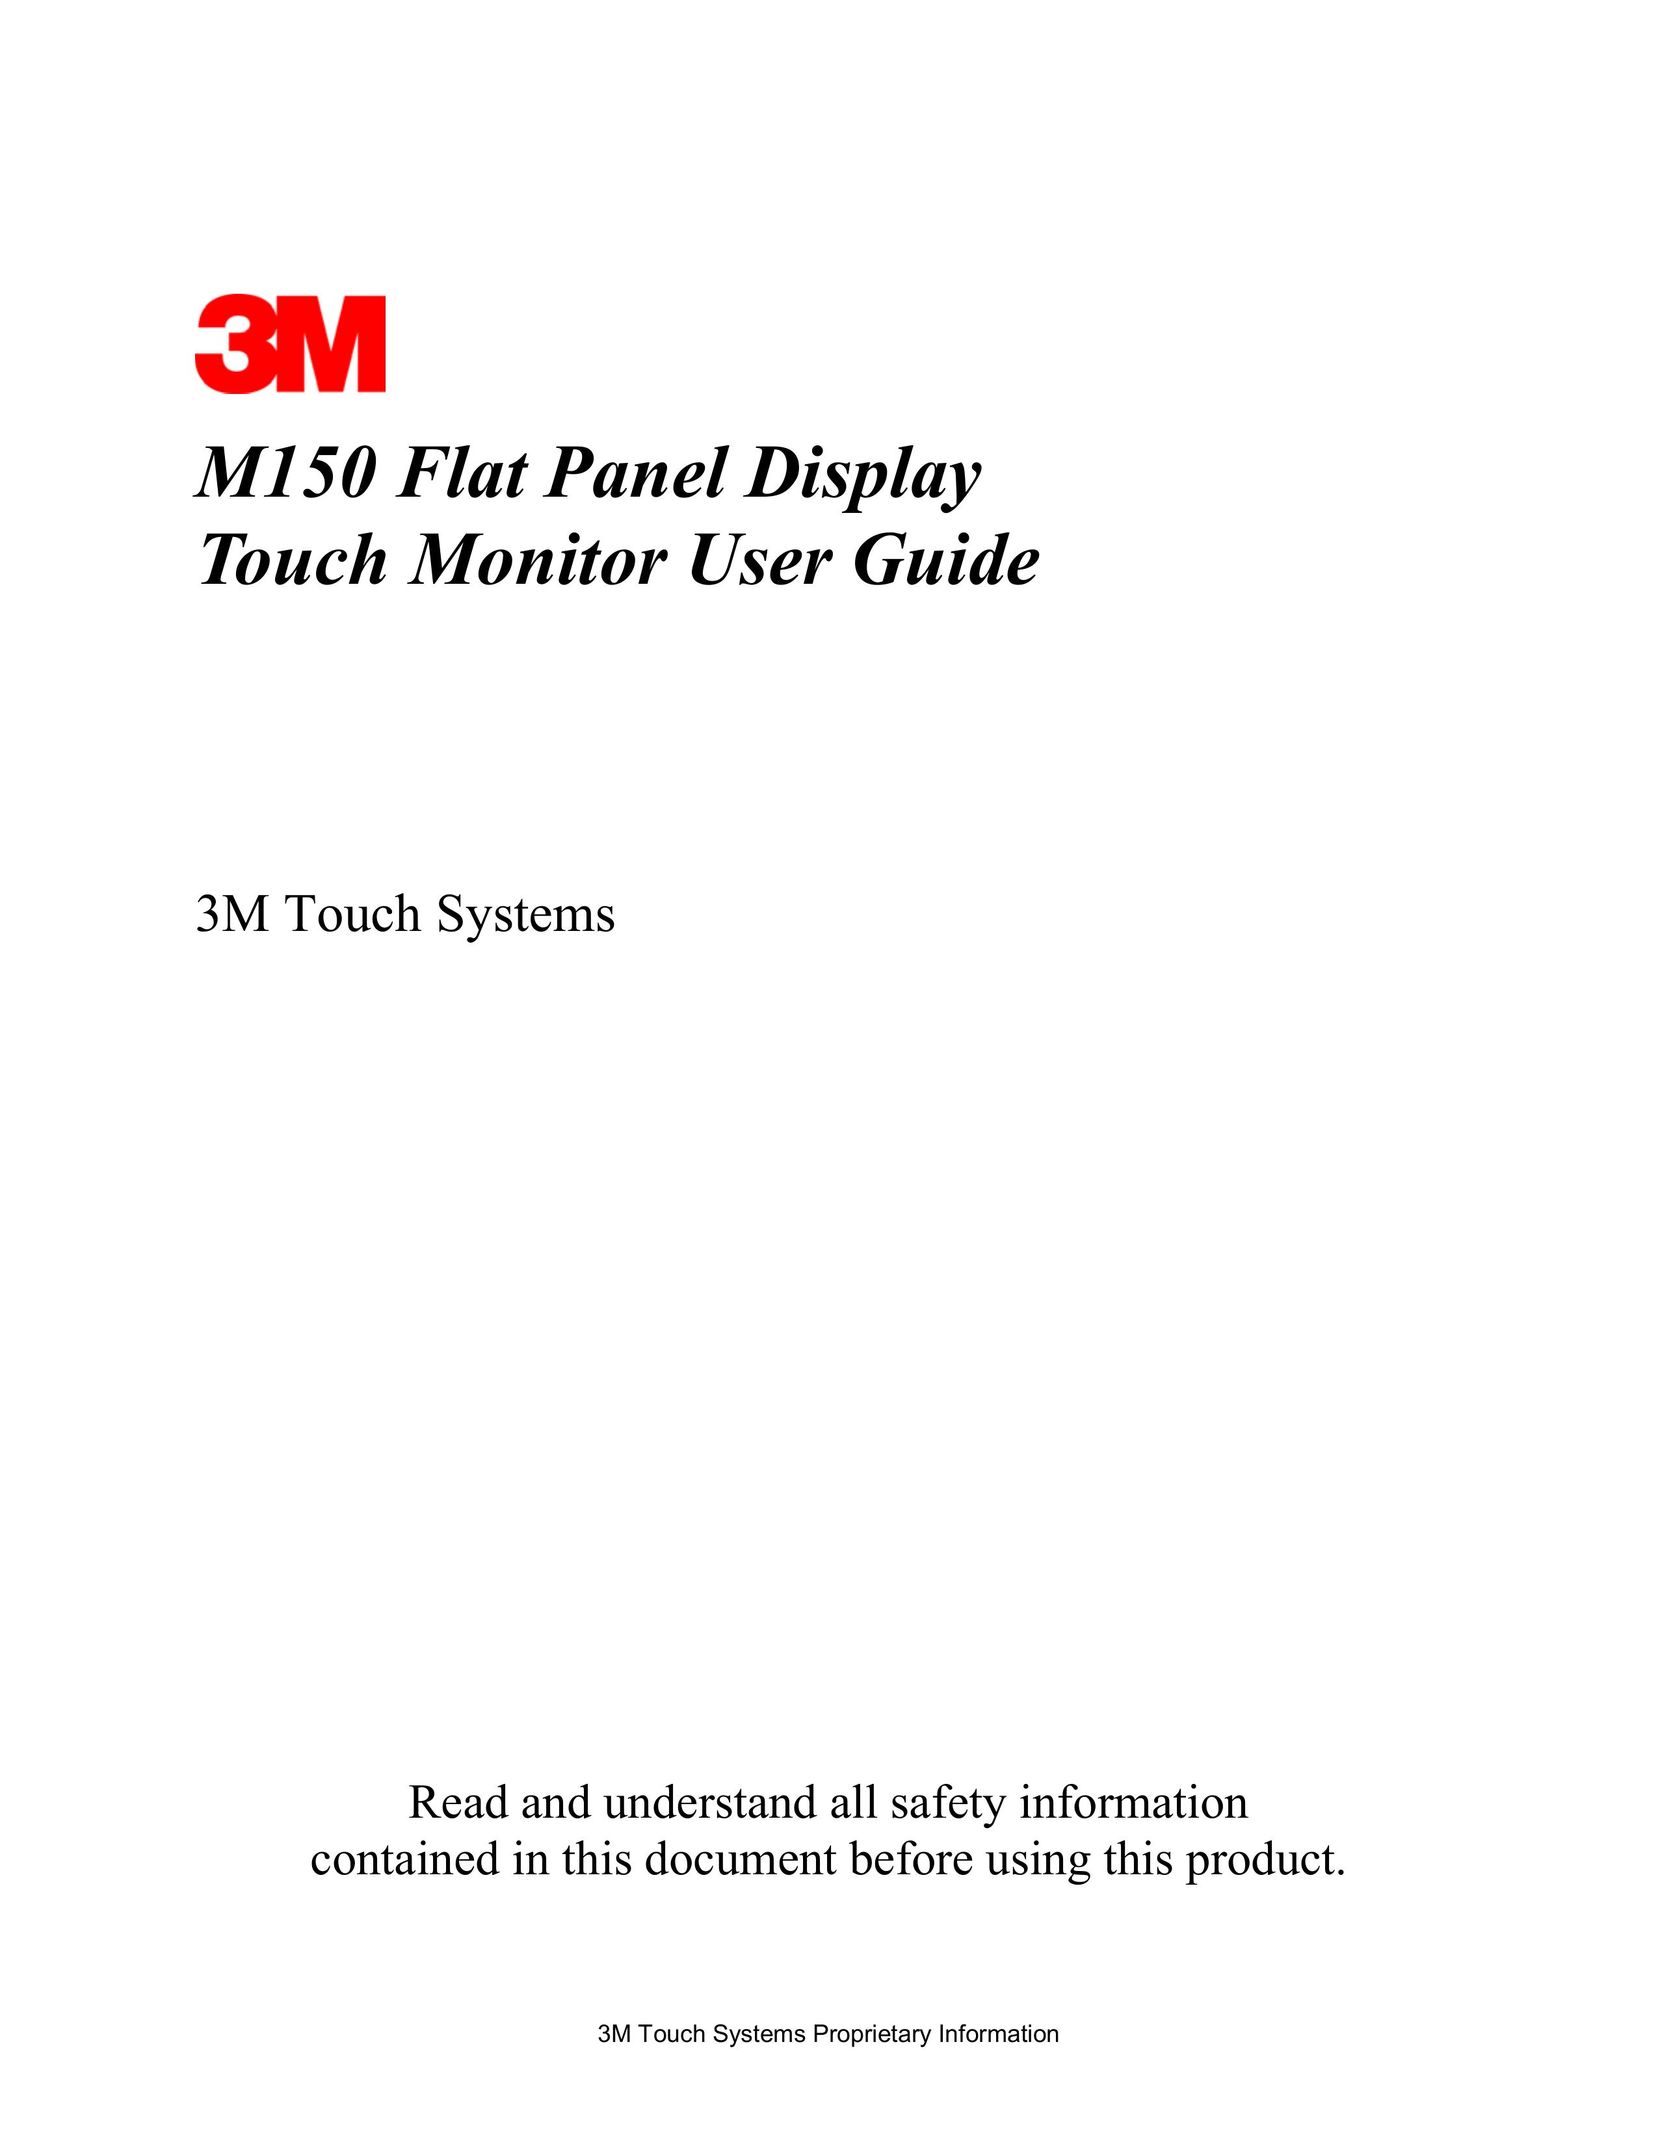 3M M150 Computer Monitor User Manual